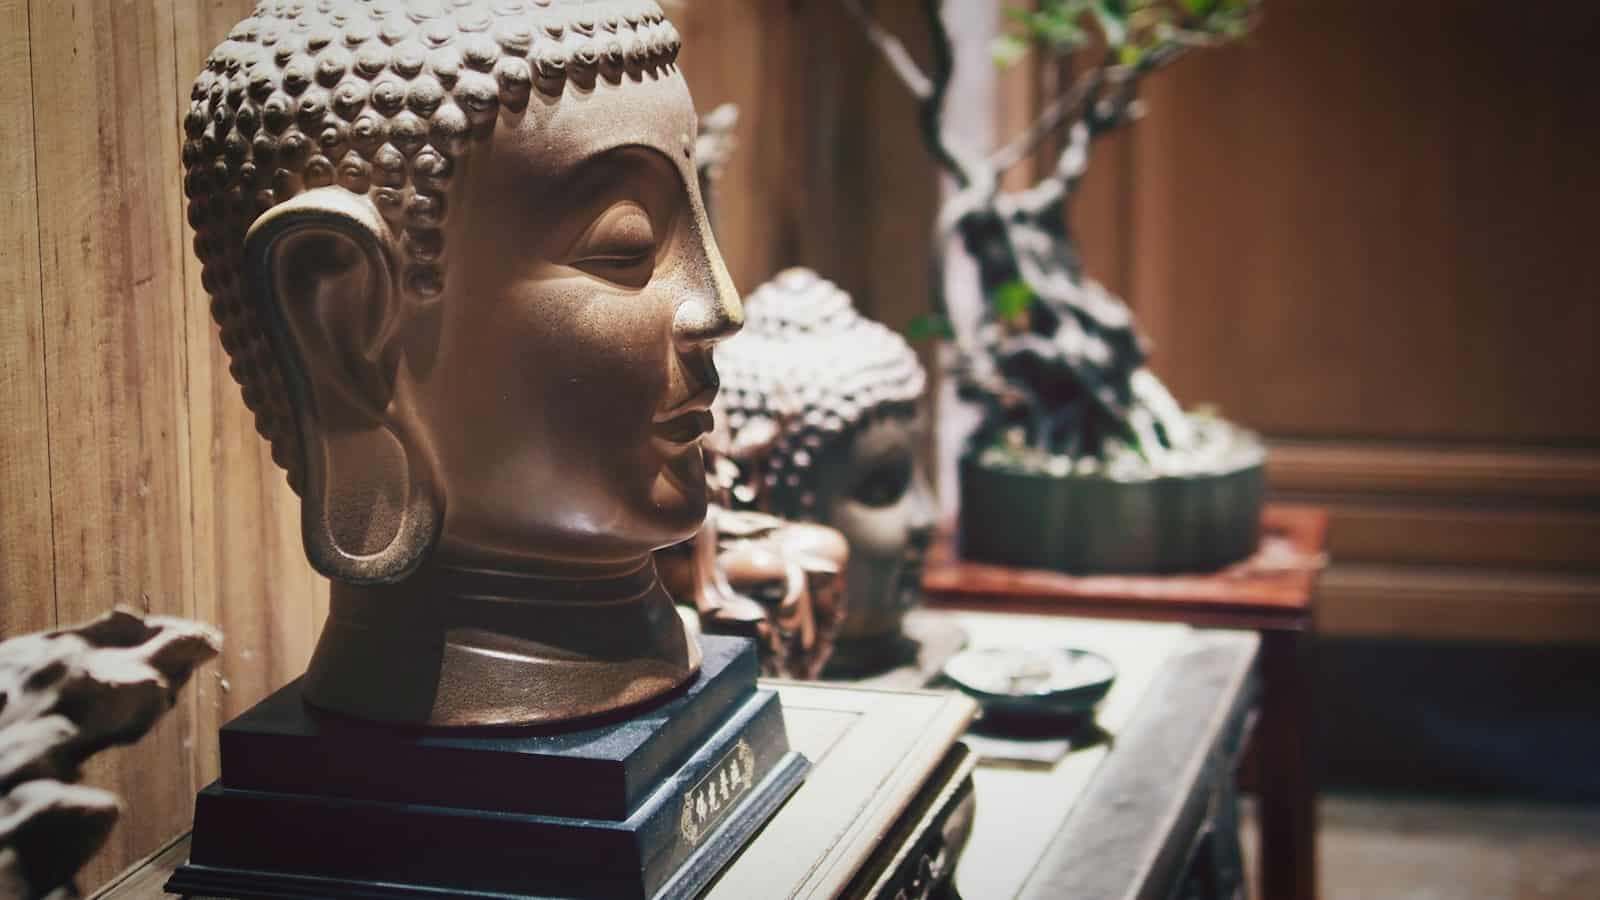 Gautama Buddha head decor on table